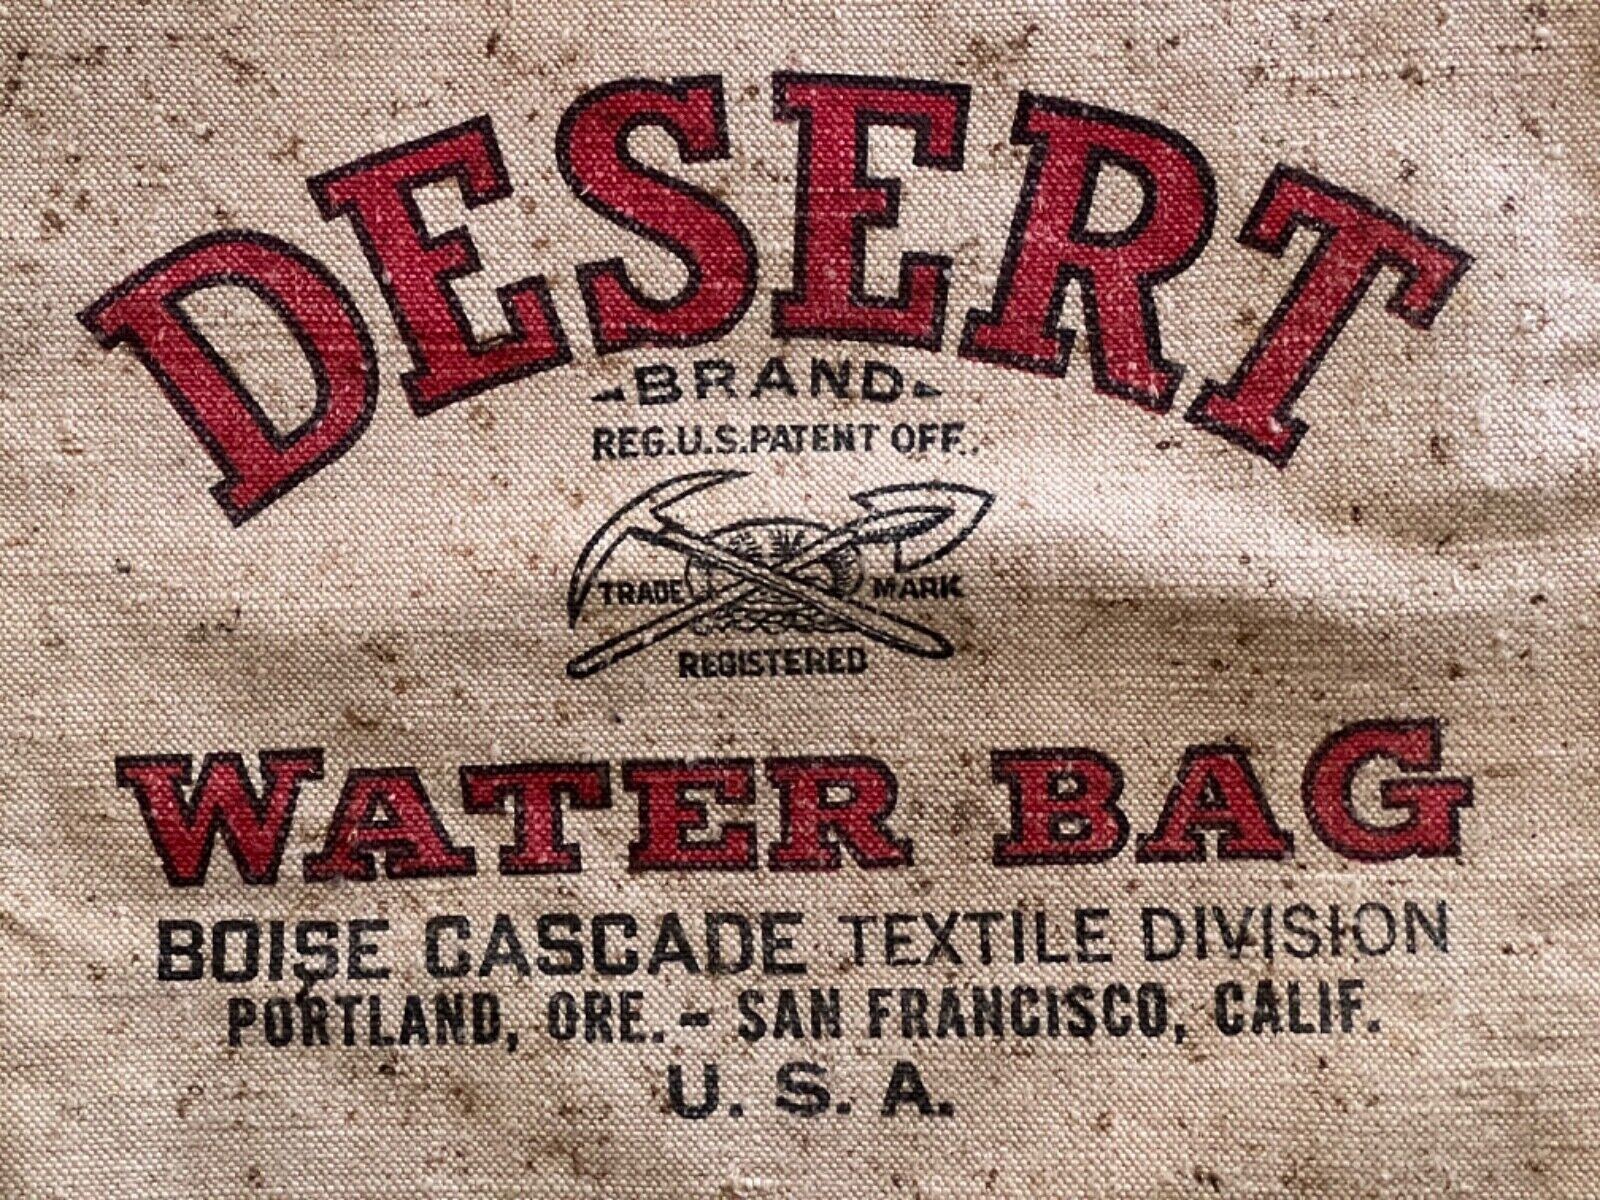 VINTAGE  DESERT WATER BAG  [Boise Cascade Textile Div. Portland, San Francisco ]